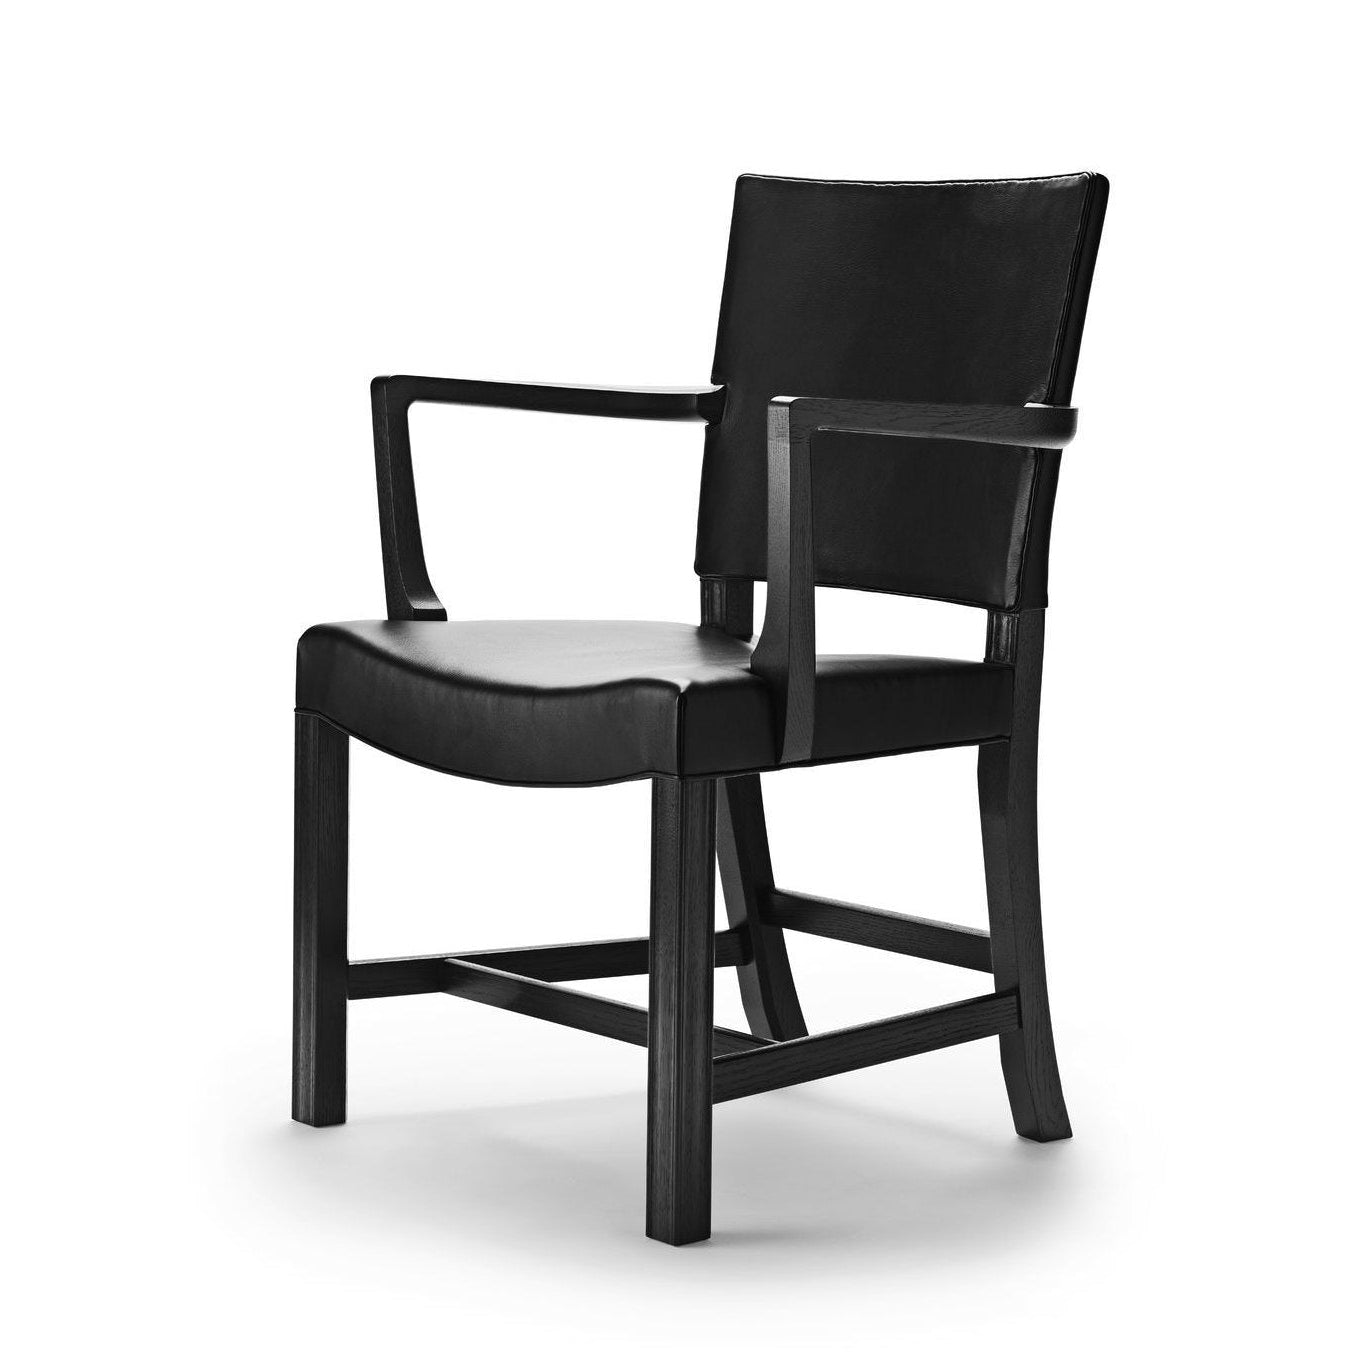 Carl Hansen KK37581 sillón rojo grande, roble negro/cuero negro